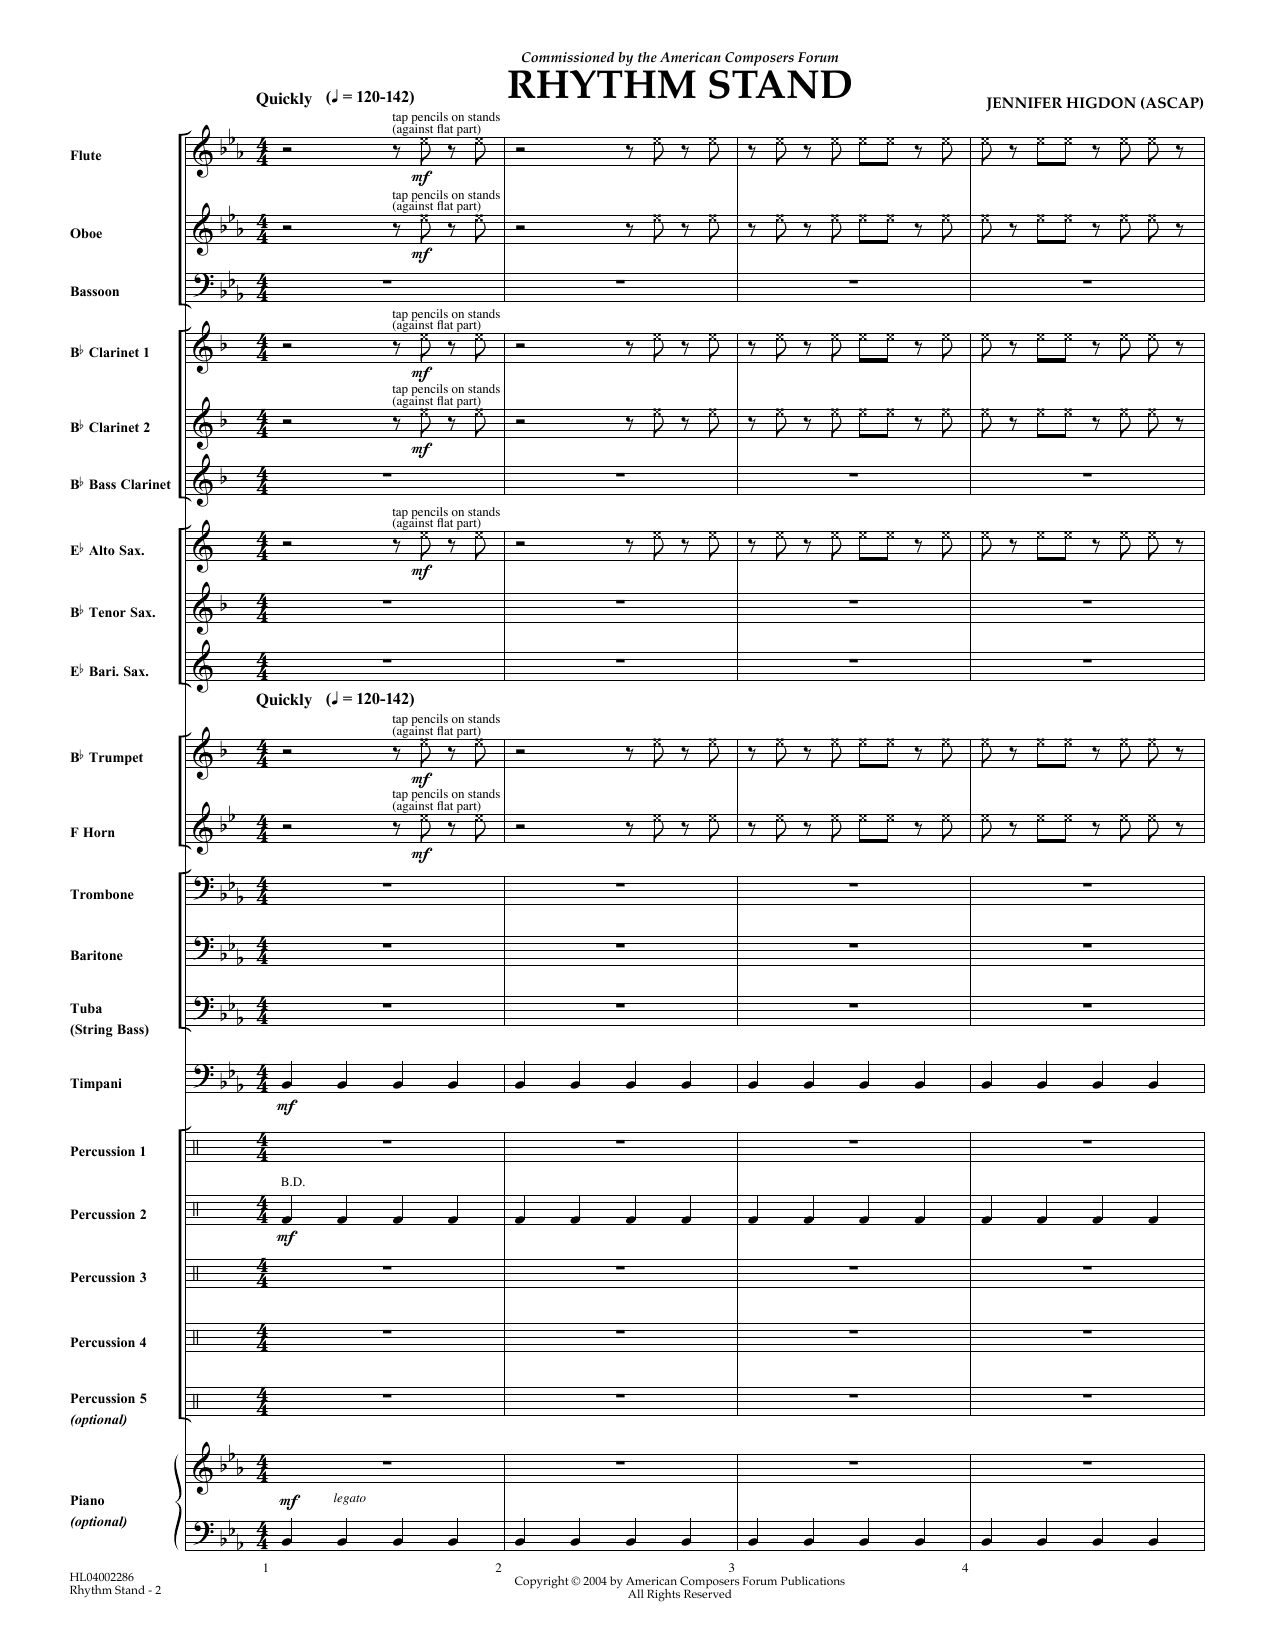 Jennifer Higdon Rhythm Stand - Full Score Sheet Music Notes & Chords for Concert Band - Download or Print PDF